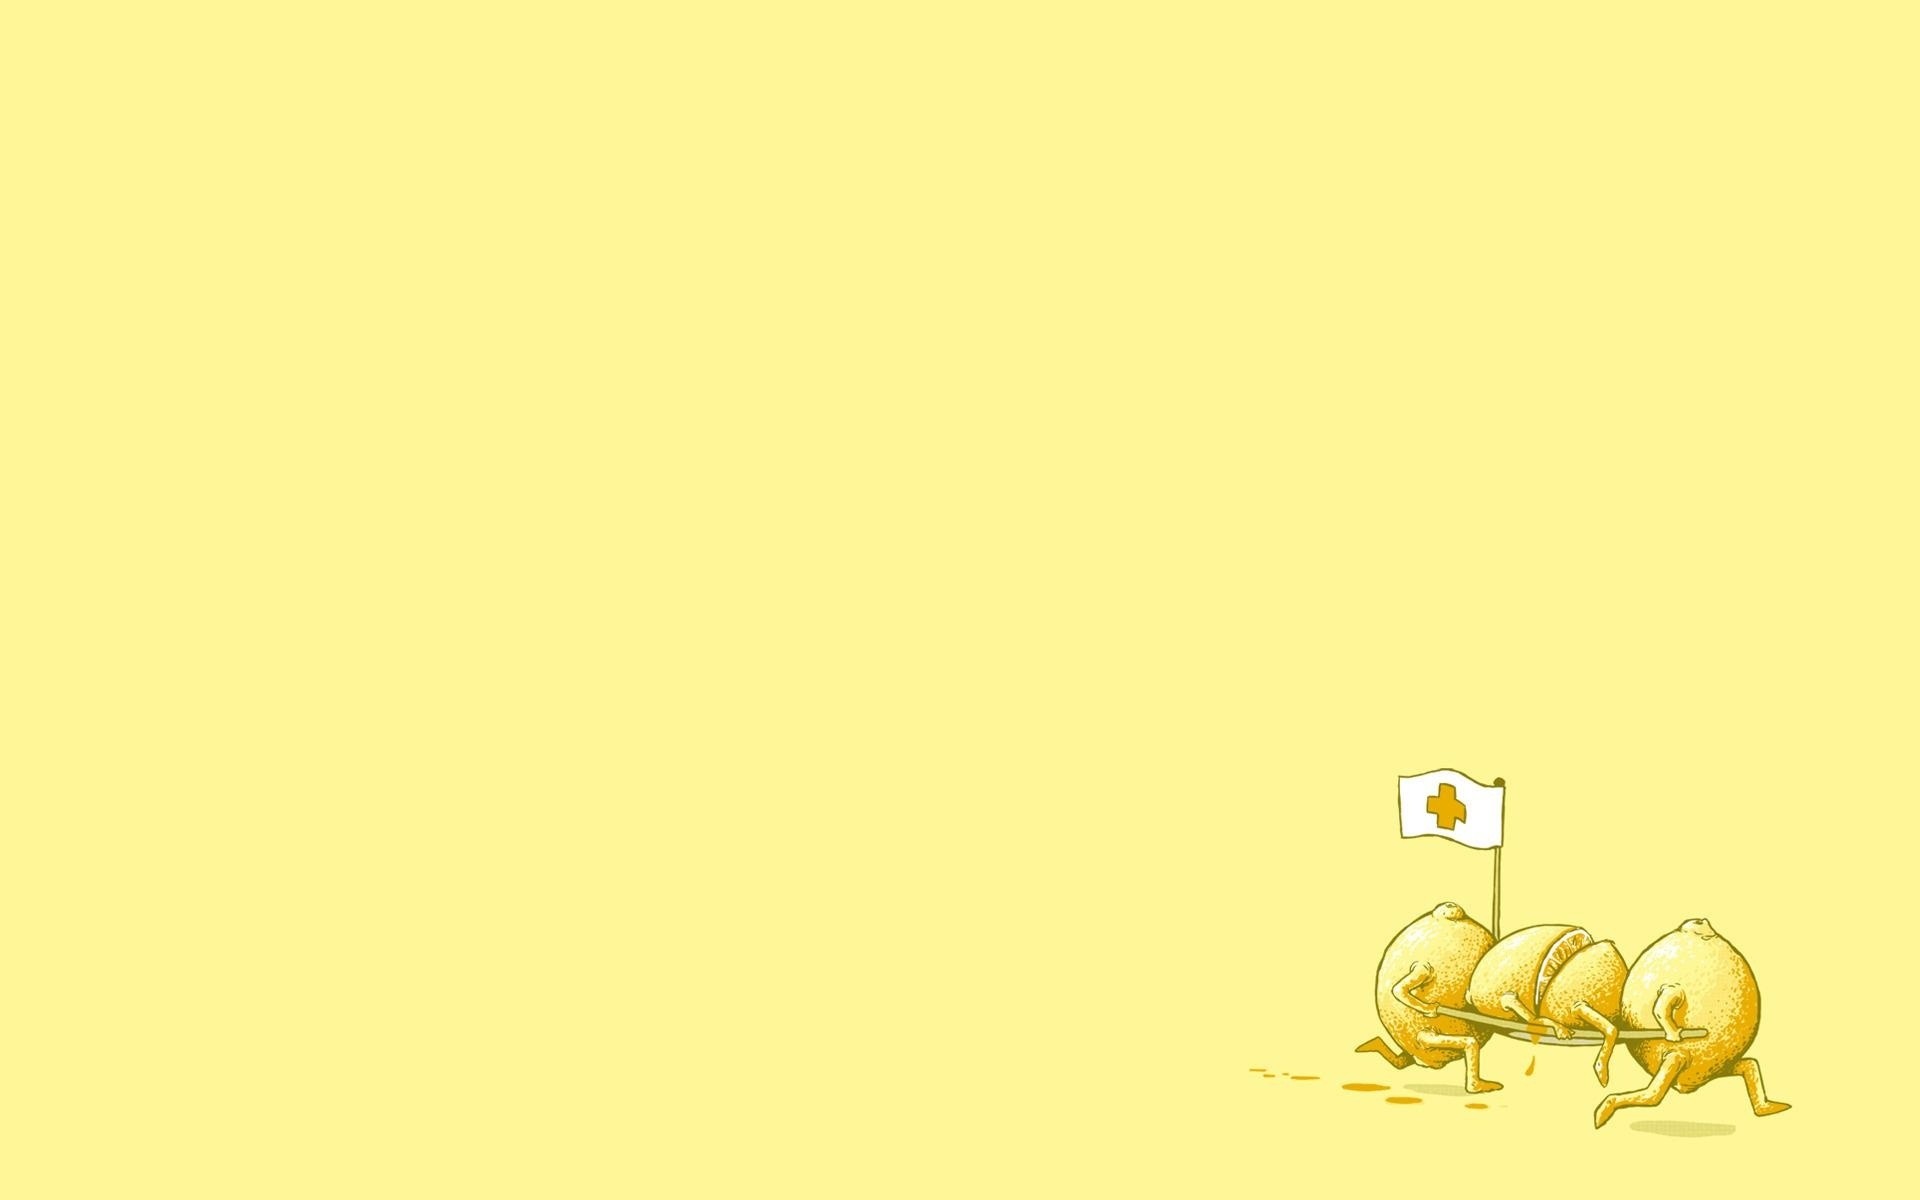 Digital Art Minimalism Humor Yellow Background Fruit Lemons Doctors Wounds Flag Running 1920x1200